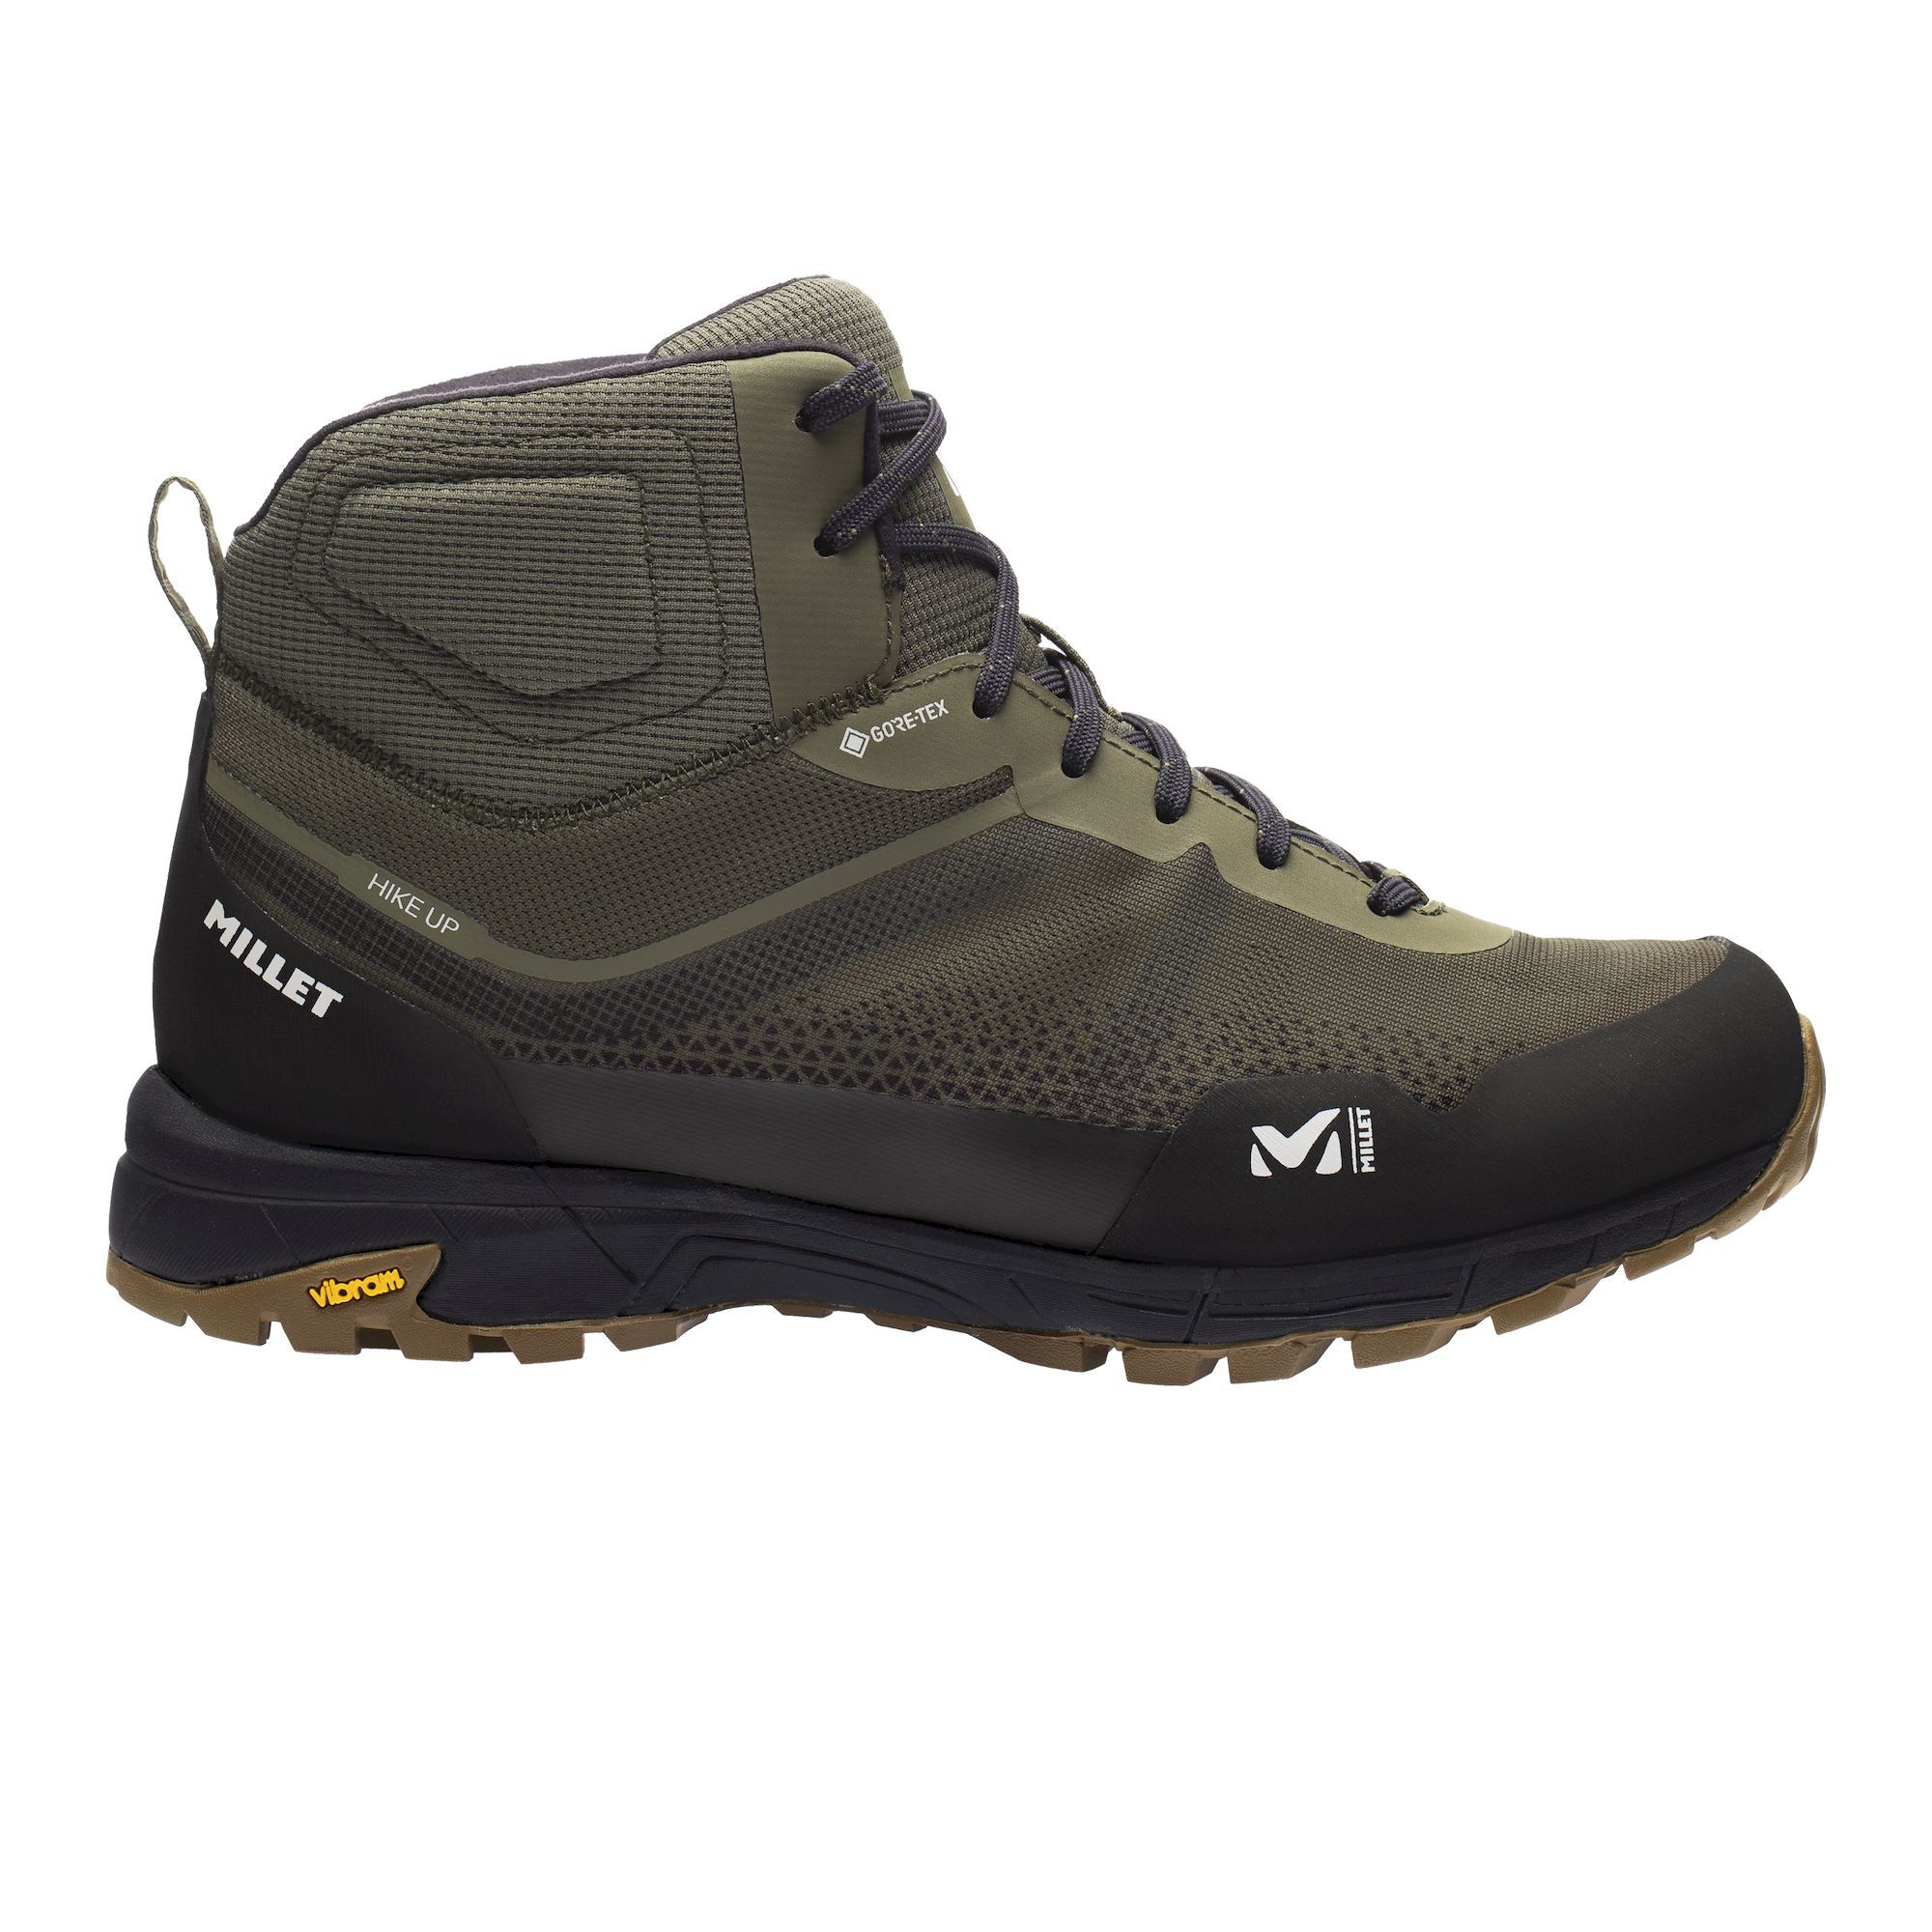 Millet Hike Up Mid GTX - Walking shoes - Men's